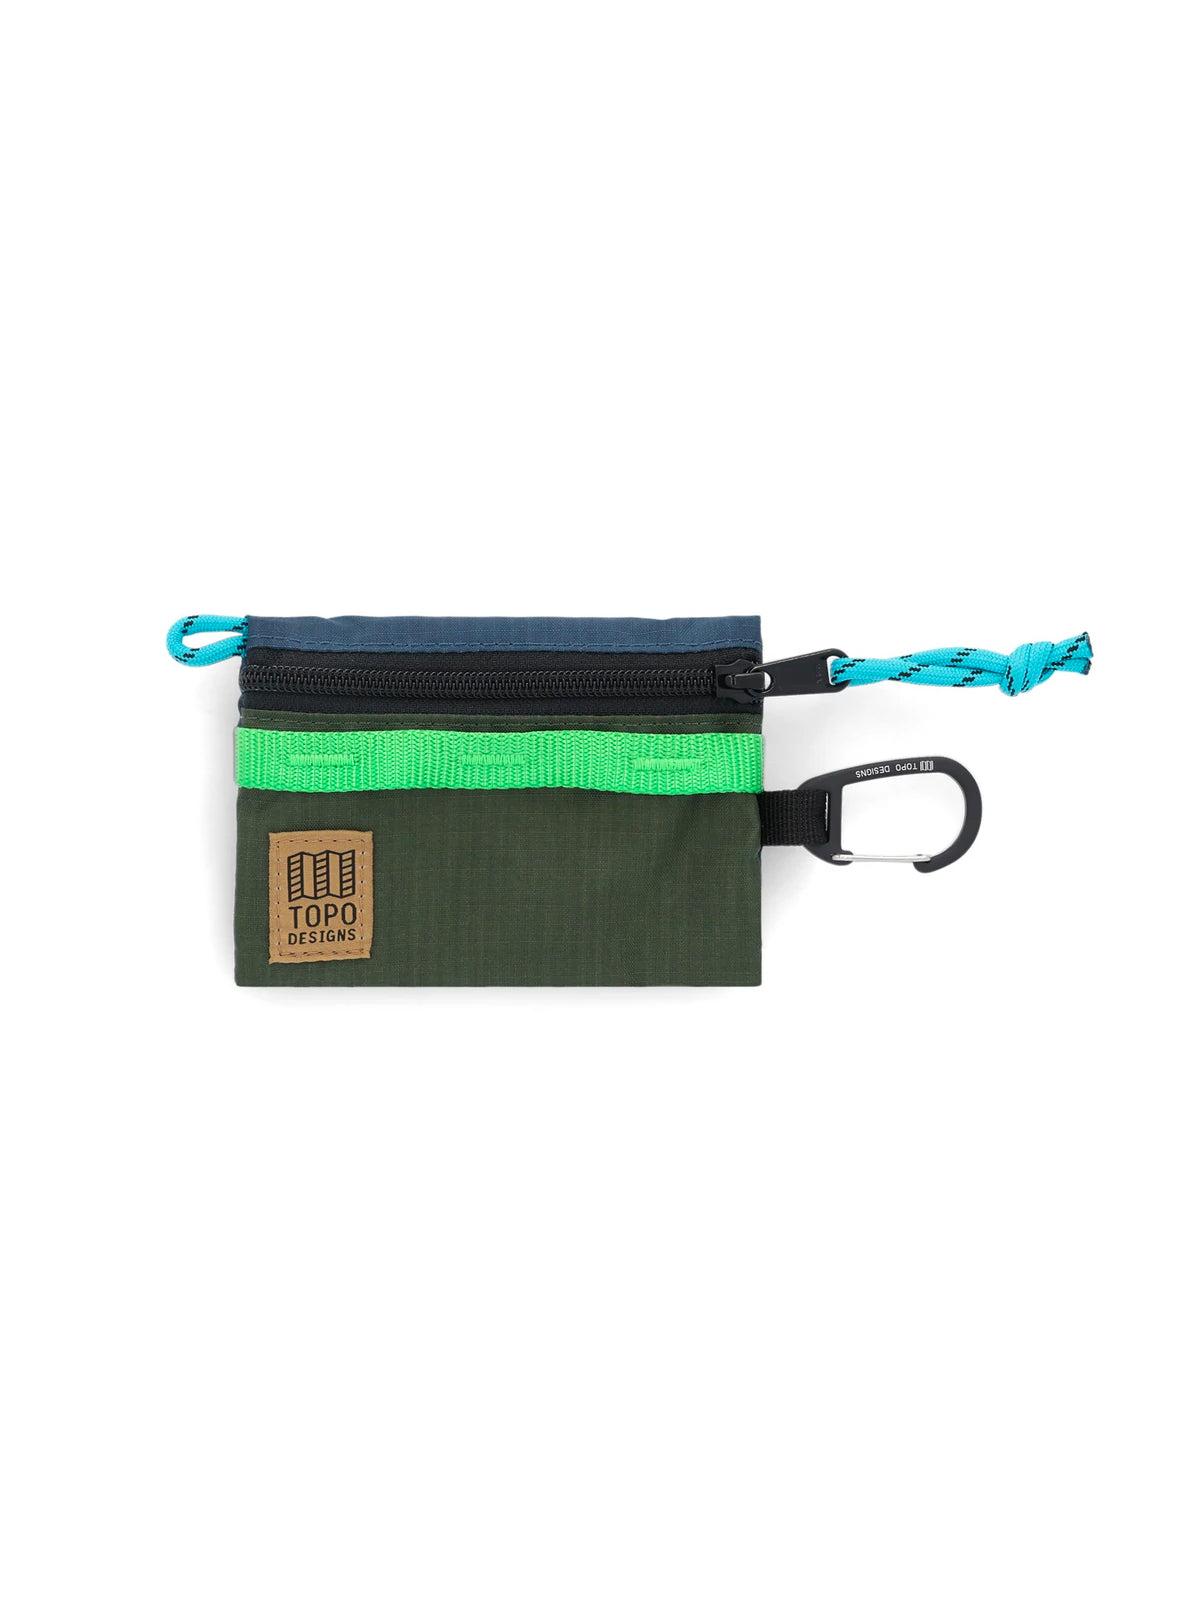 Topo Designs Mountain Accessory Bag